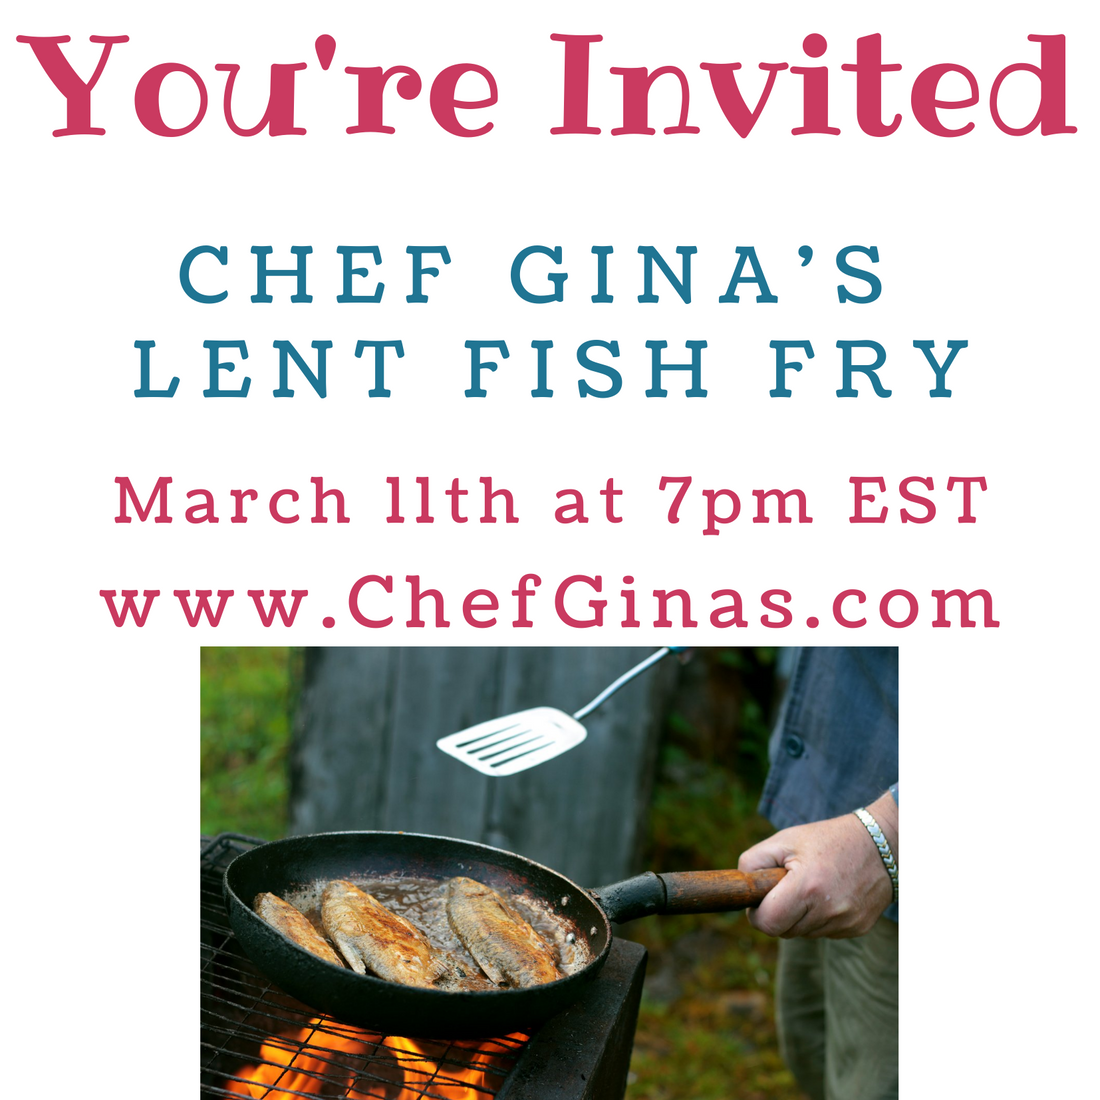 Chef Gina's Lent Fish Fry